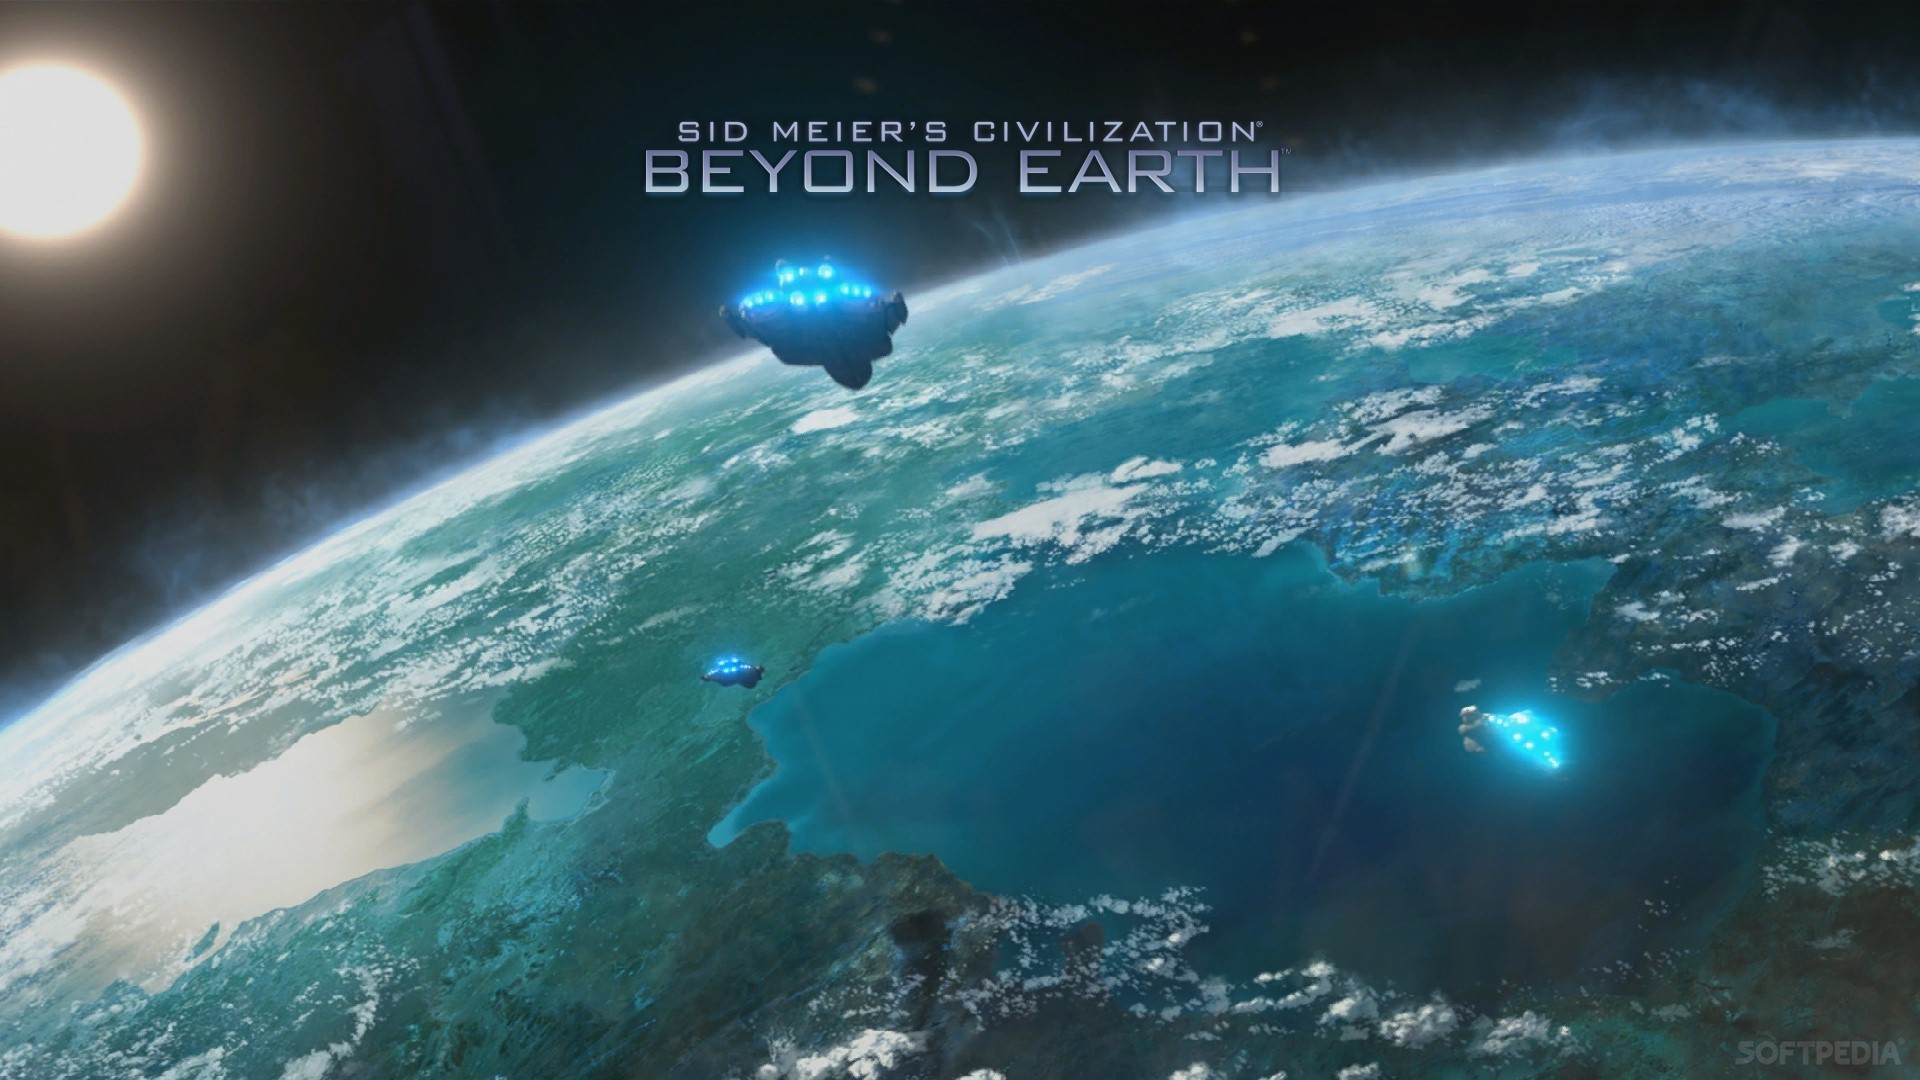 720p civilization beyond earth image